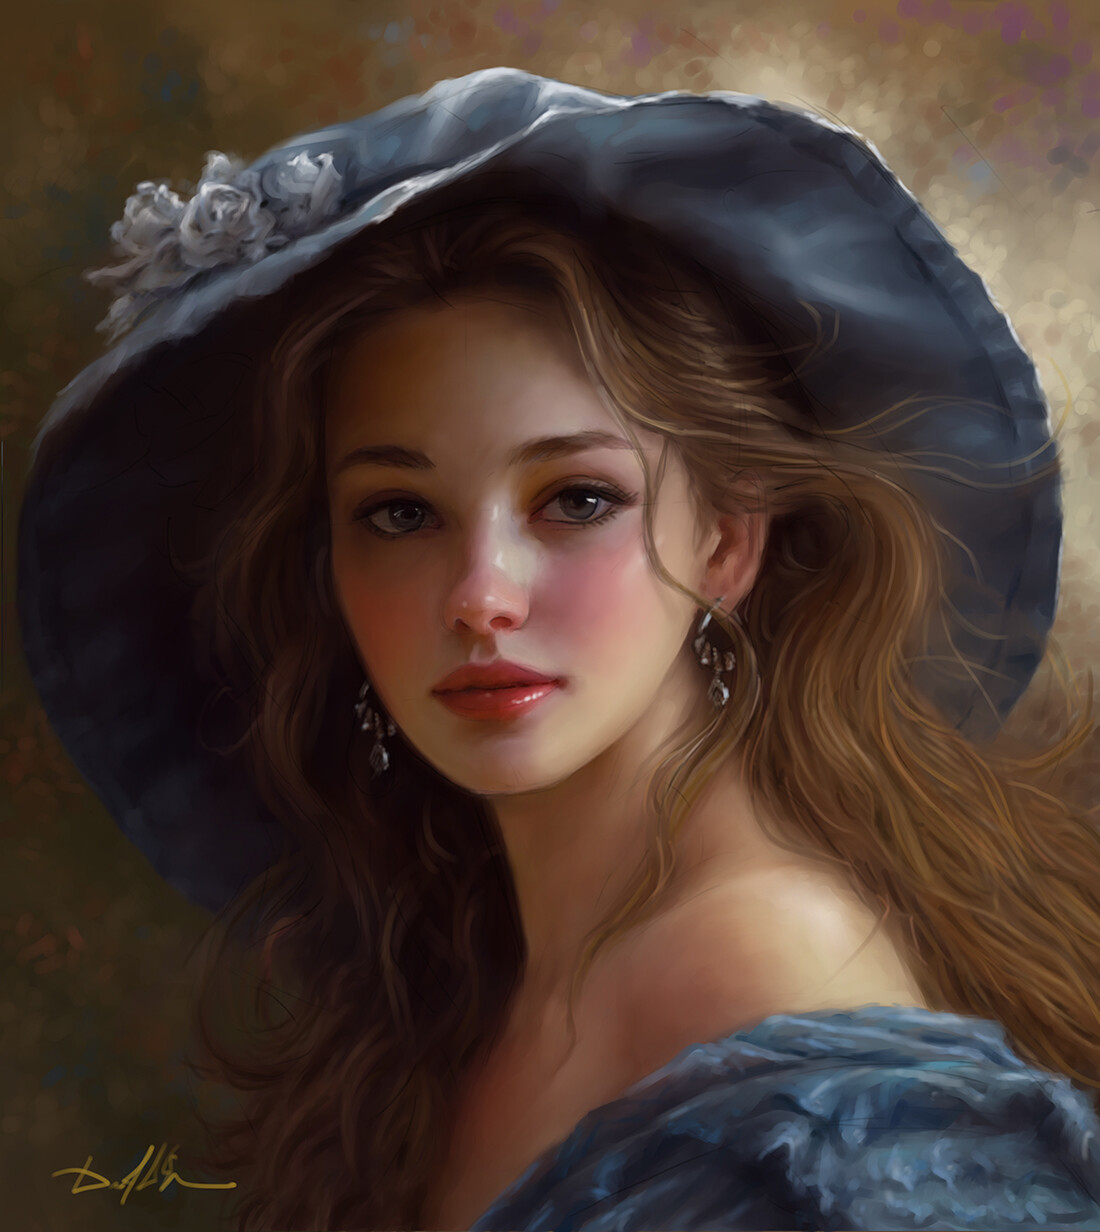 ArtStation - CSP Digital Portrait Painting